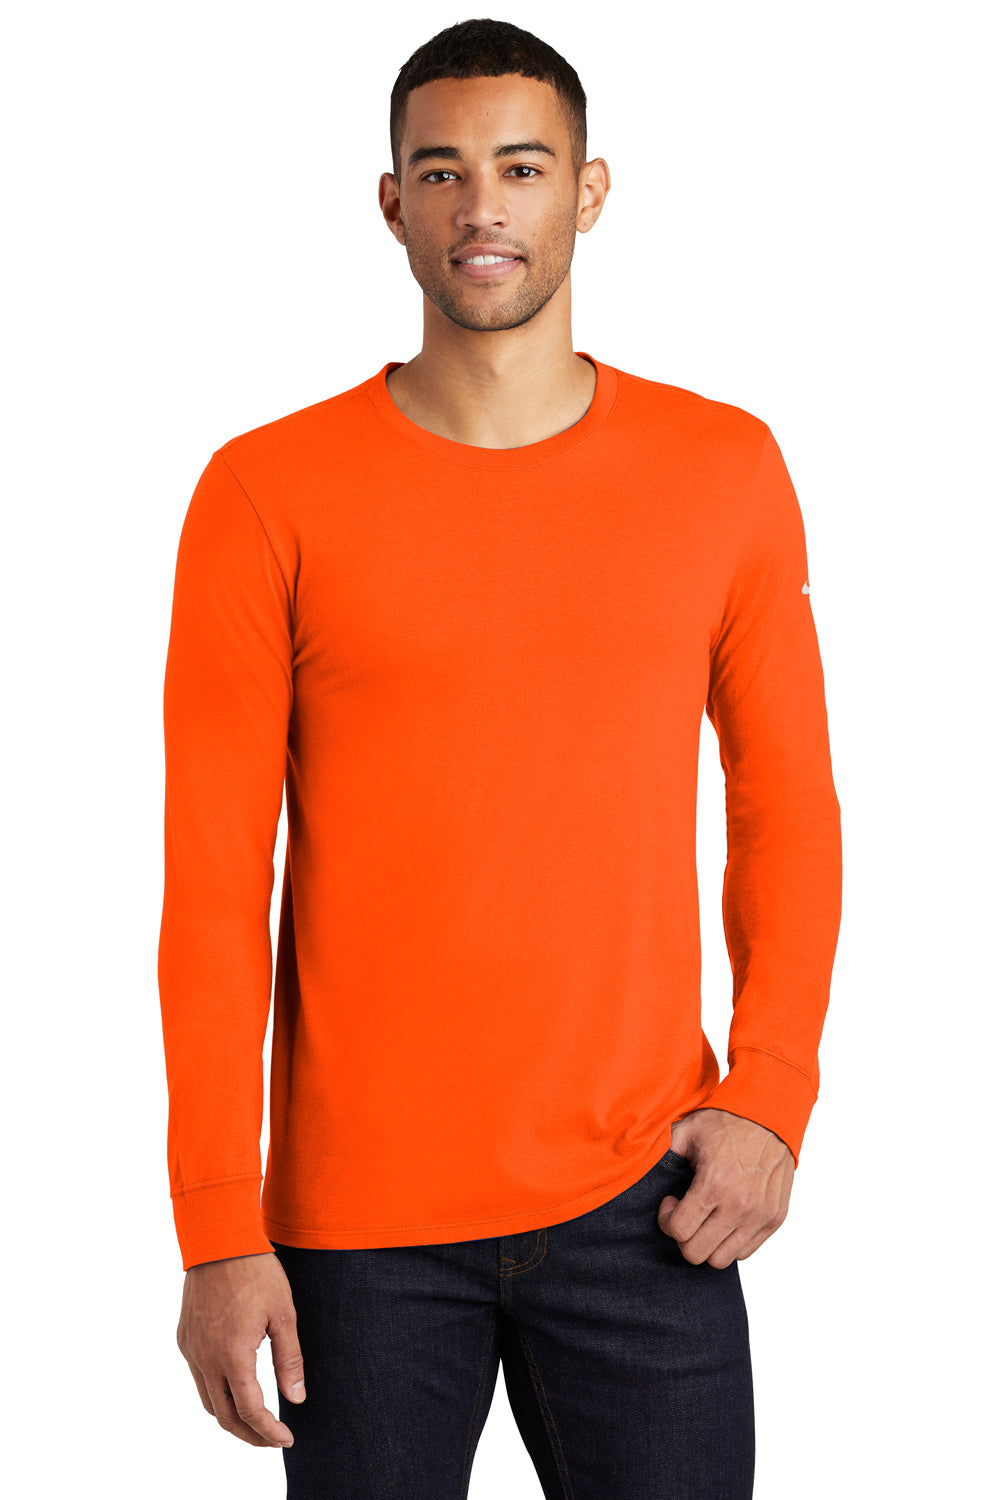 Nike NKBQ5232 Mens Core Long Sleeve Crewneck T-Shirt Orange Front